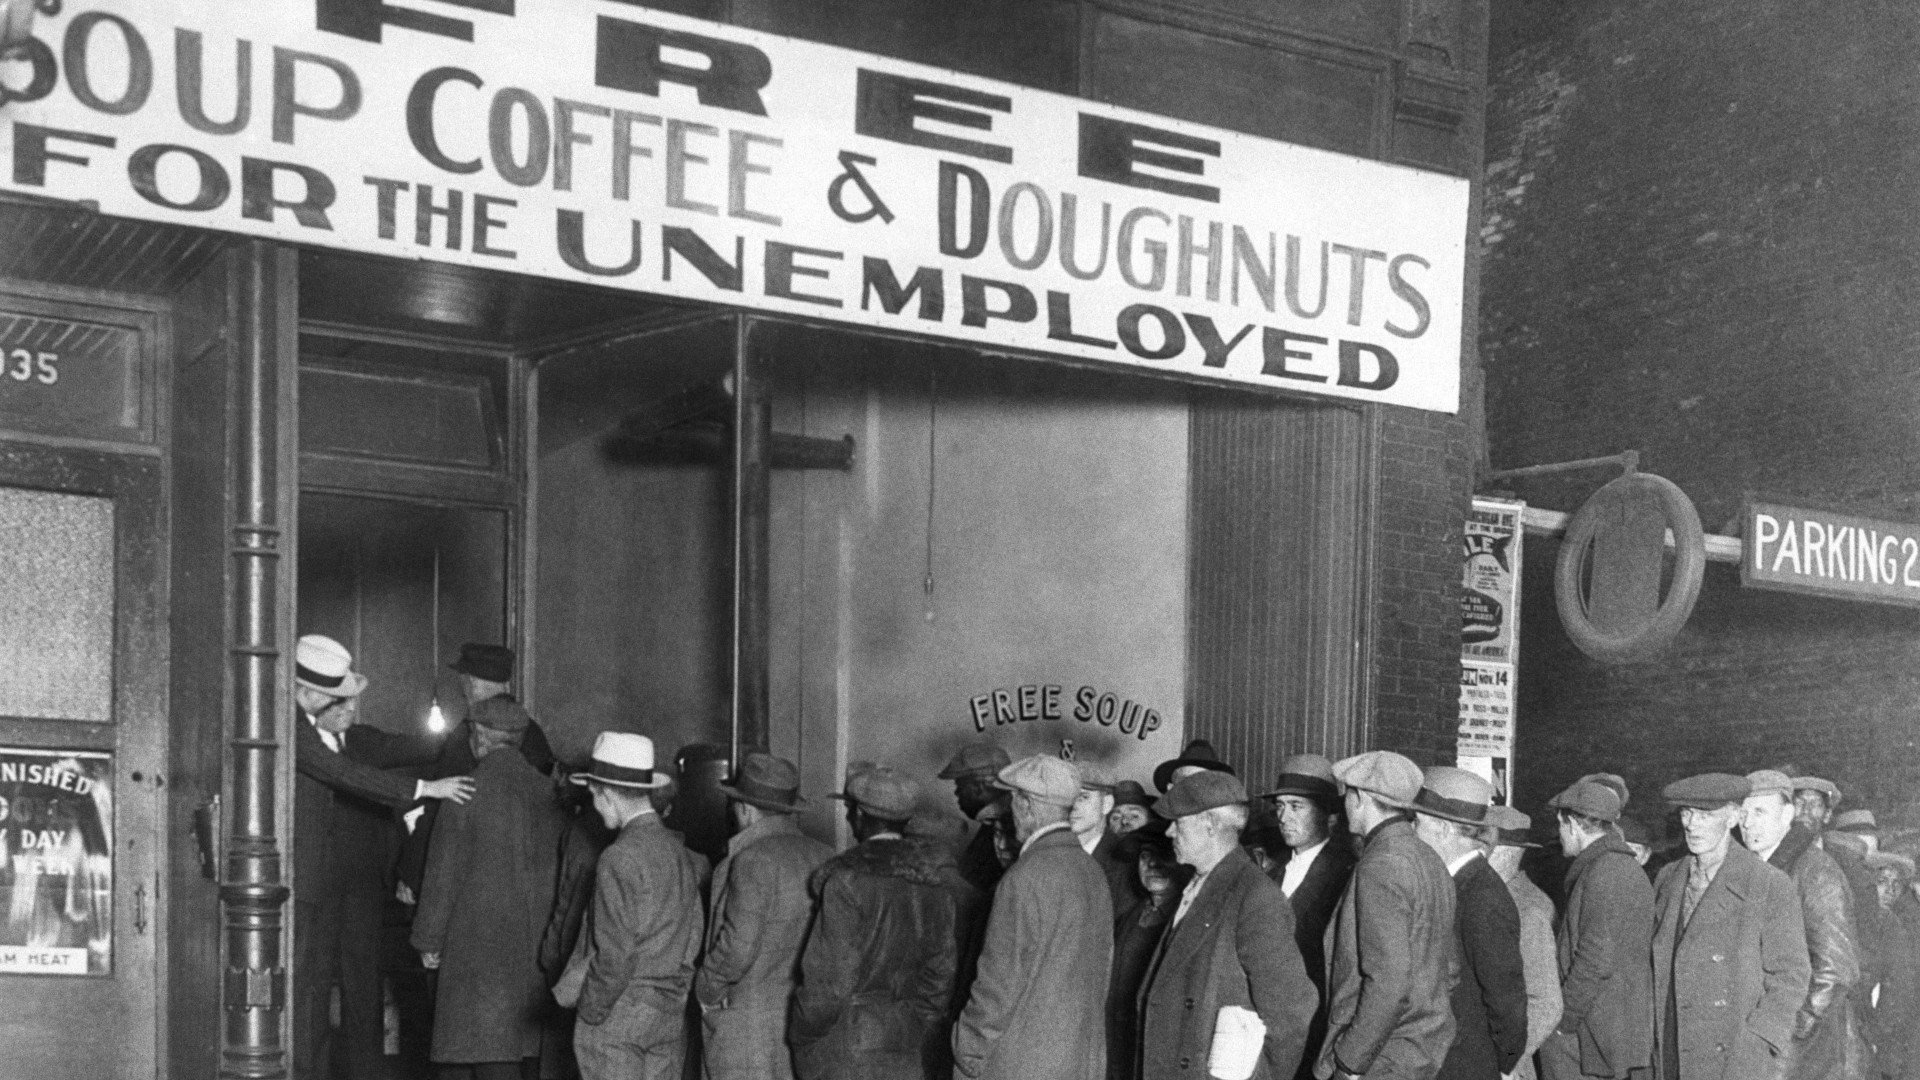 America's Biggest Economic Crisis - The Great Depression